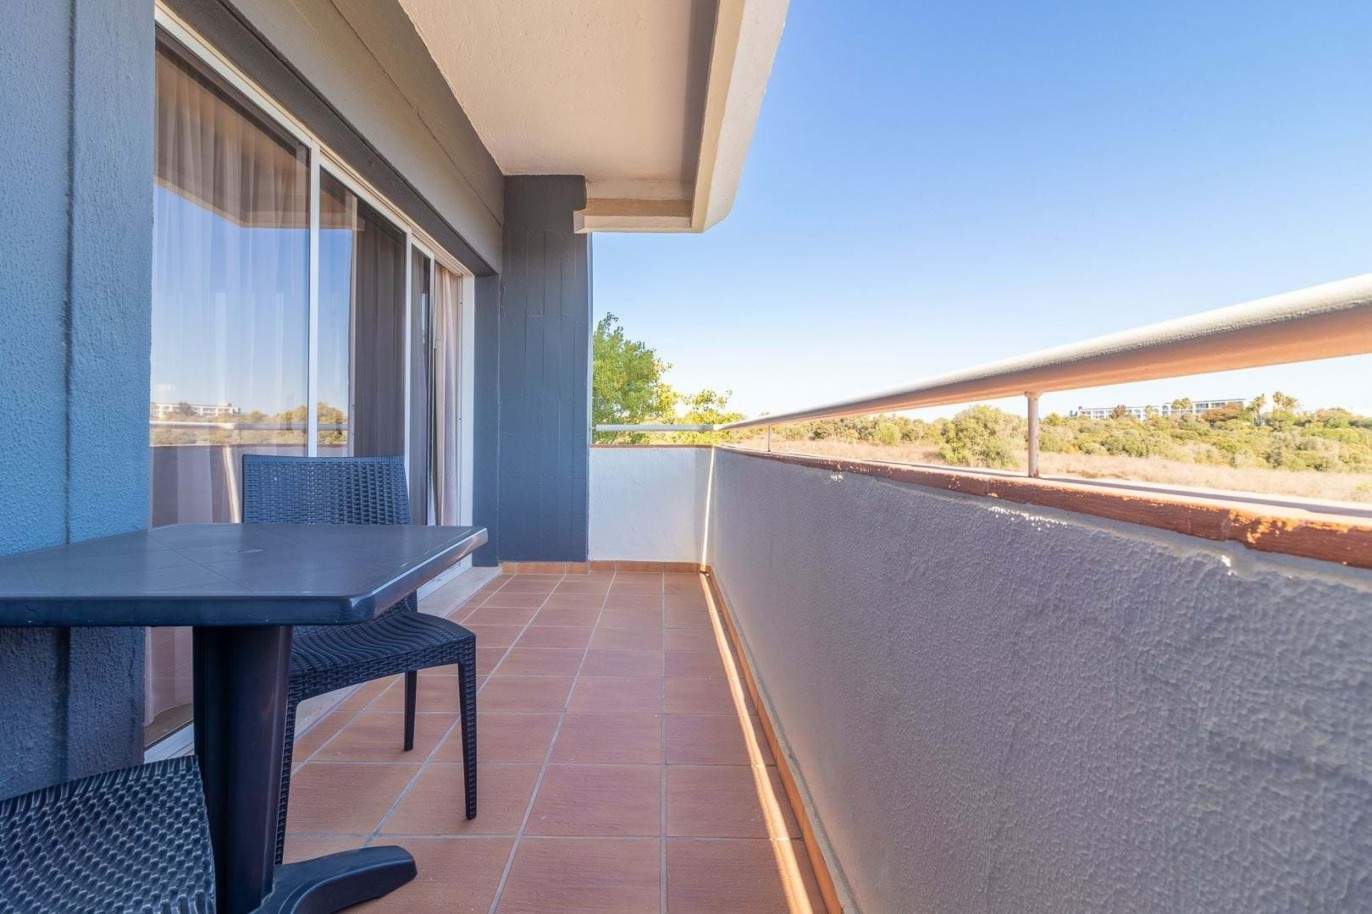 1 bedroom apartment in Alvor beach, for sale, Algarve_203068